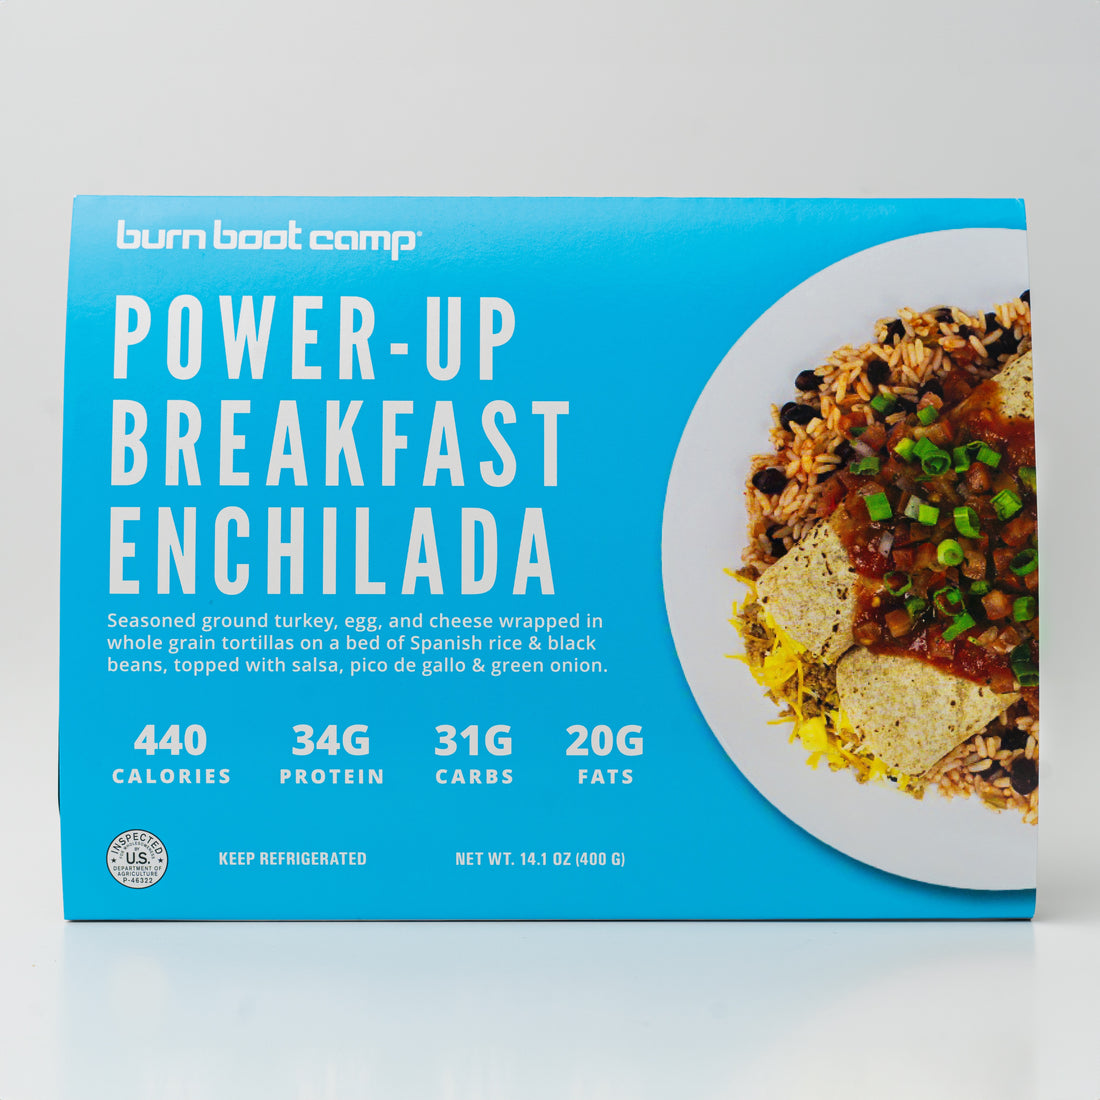 Power-Up Breakfast Enchilada